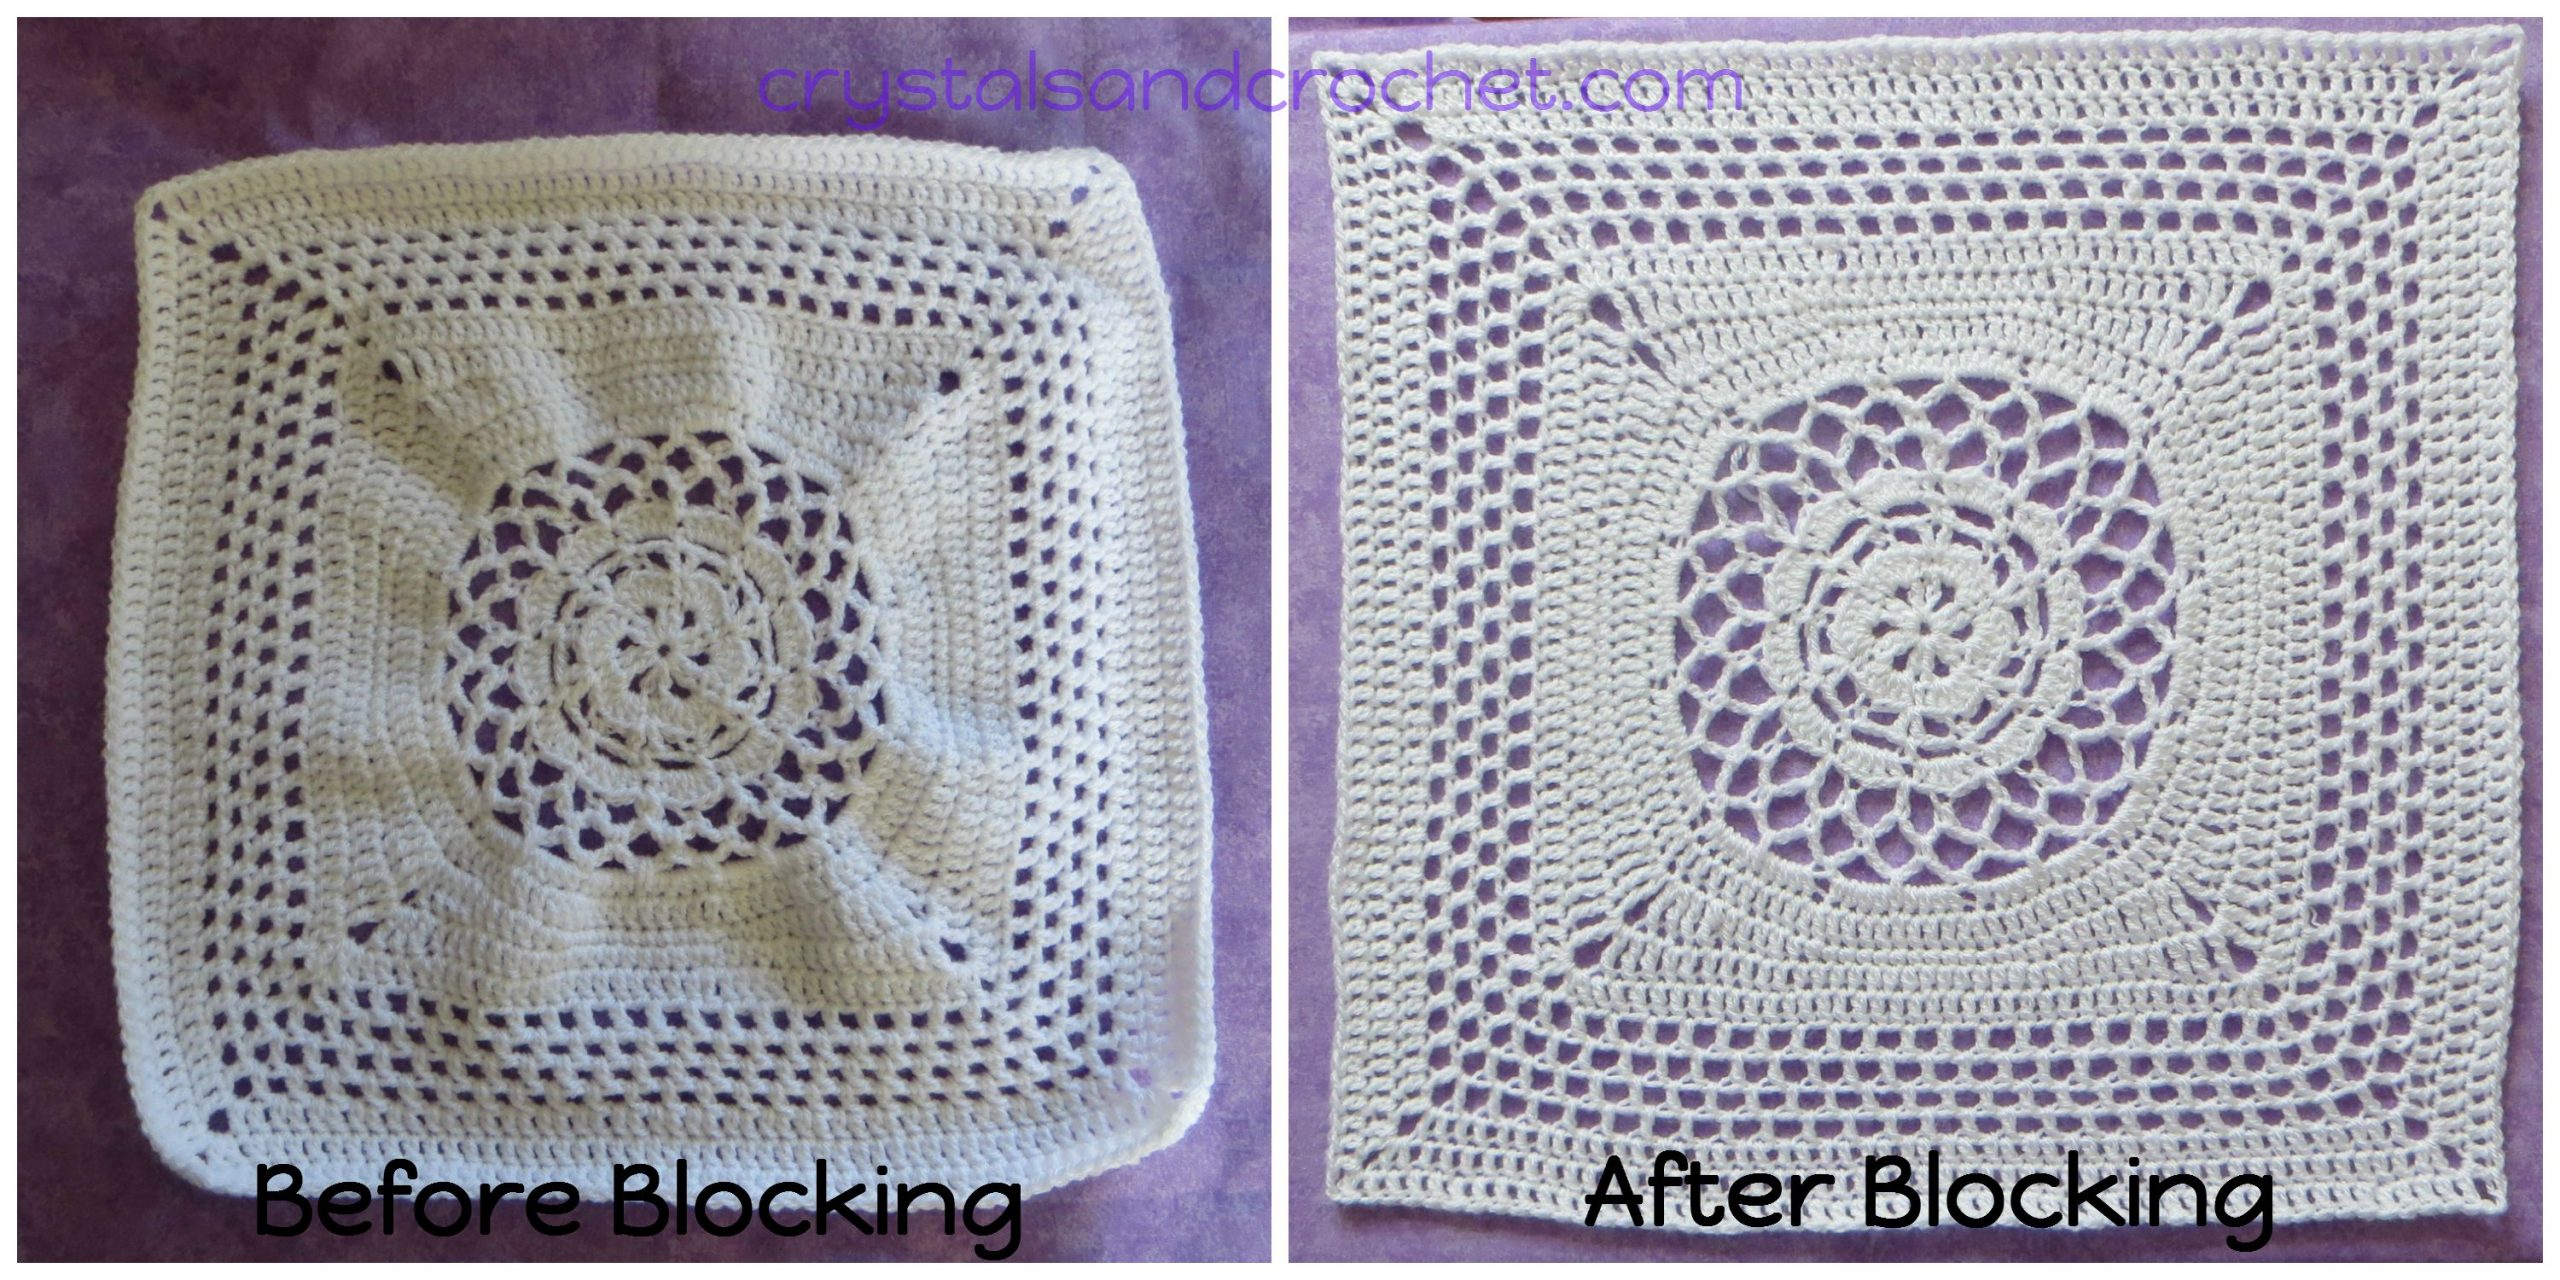 Blocking acrylic crochet blankets - Crafternoon Treats